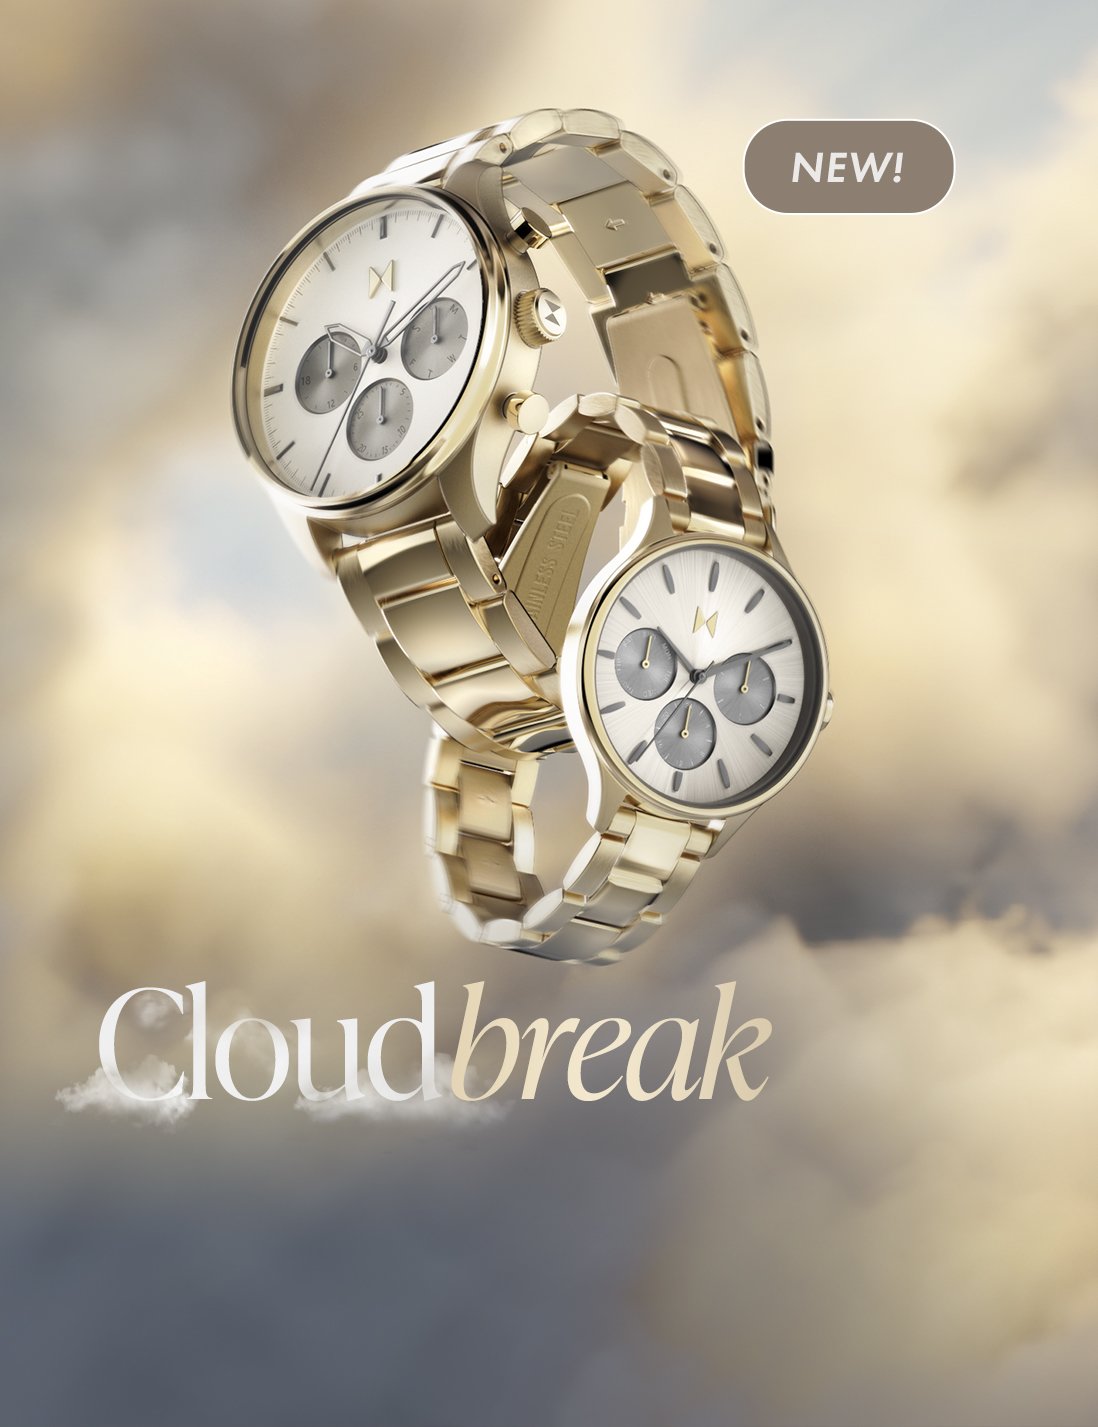 MVMT cloudbreak watches ascending into heaven